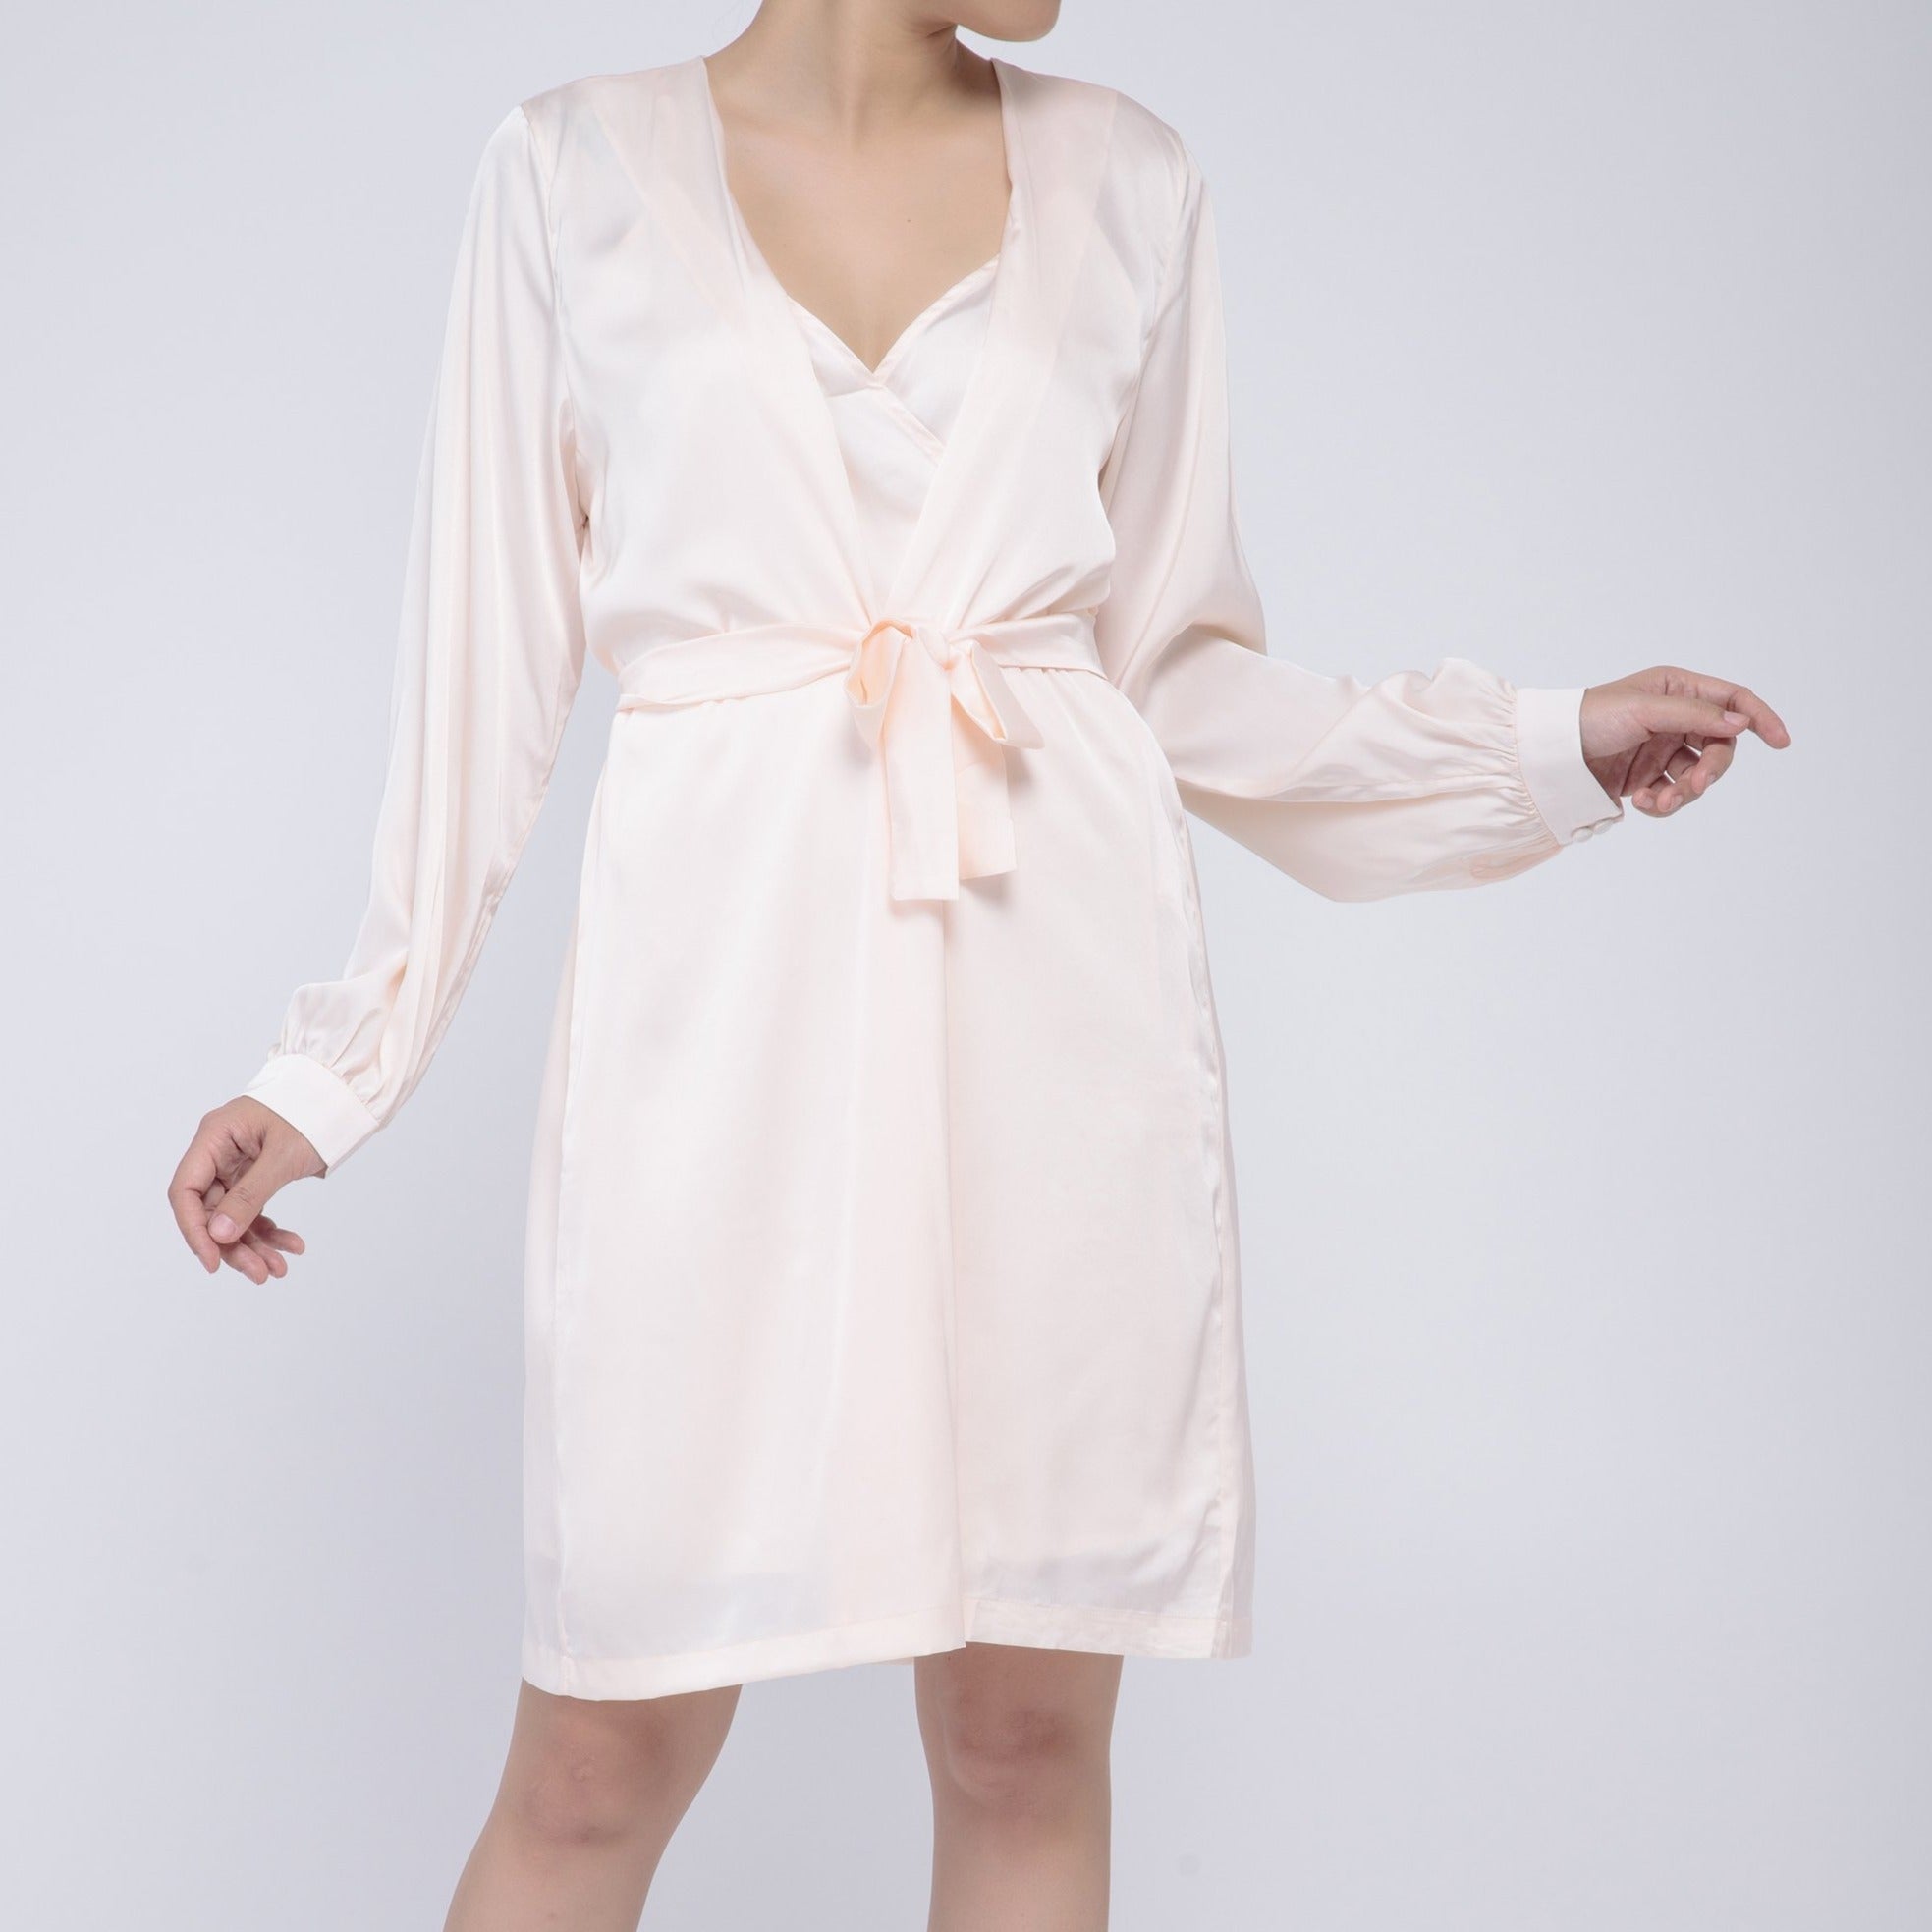 Cheibear Womens Satin Robe Nightgown Sets Lace Long Sleeve Bridesmaid  Wedding Bride Bathrobe Champagne Large : Target